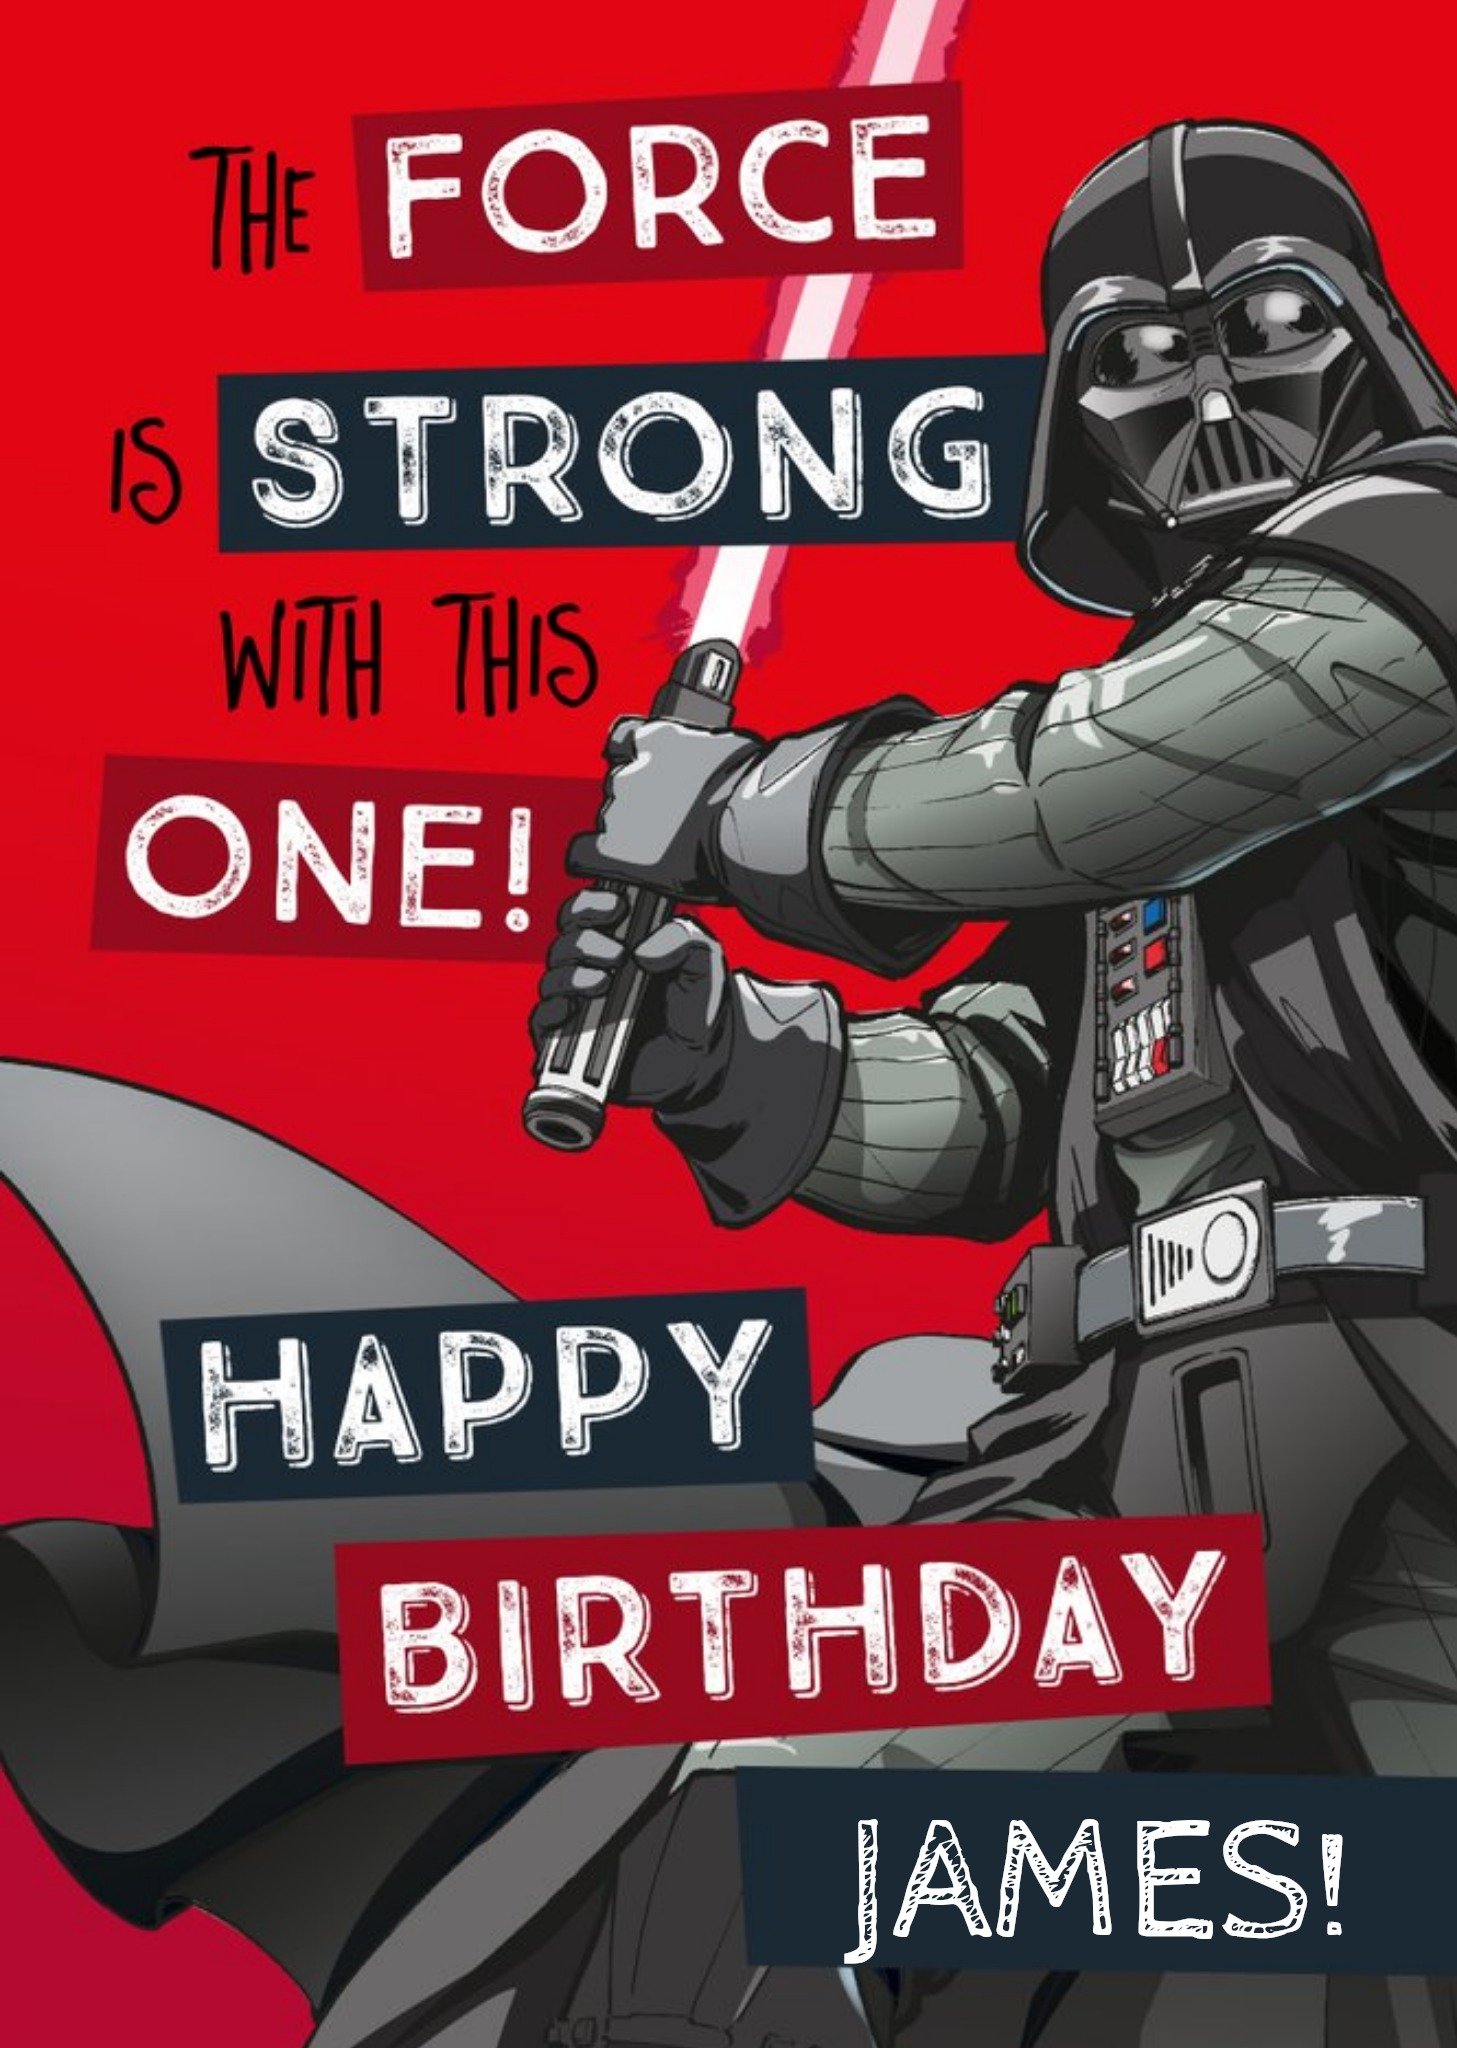 Disney Star Wars Birthday Card - Darth Vader Ecard